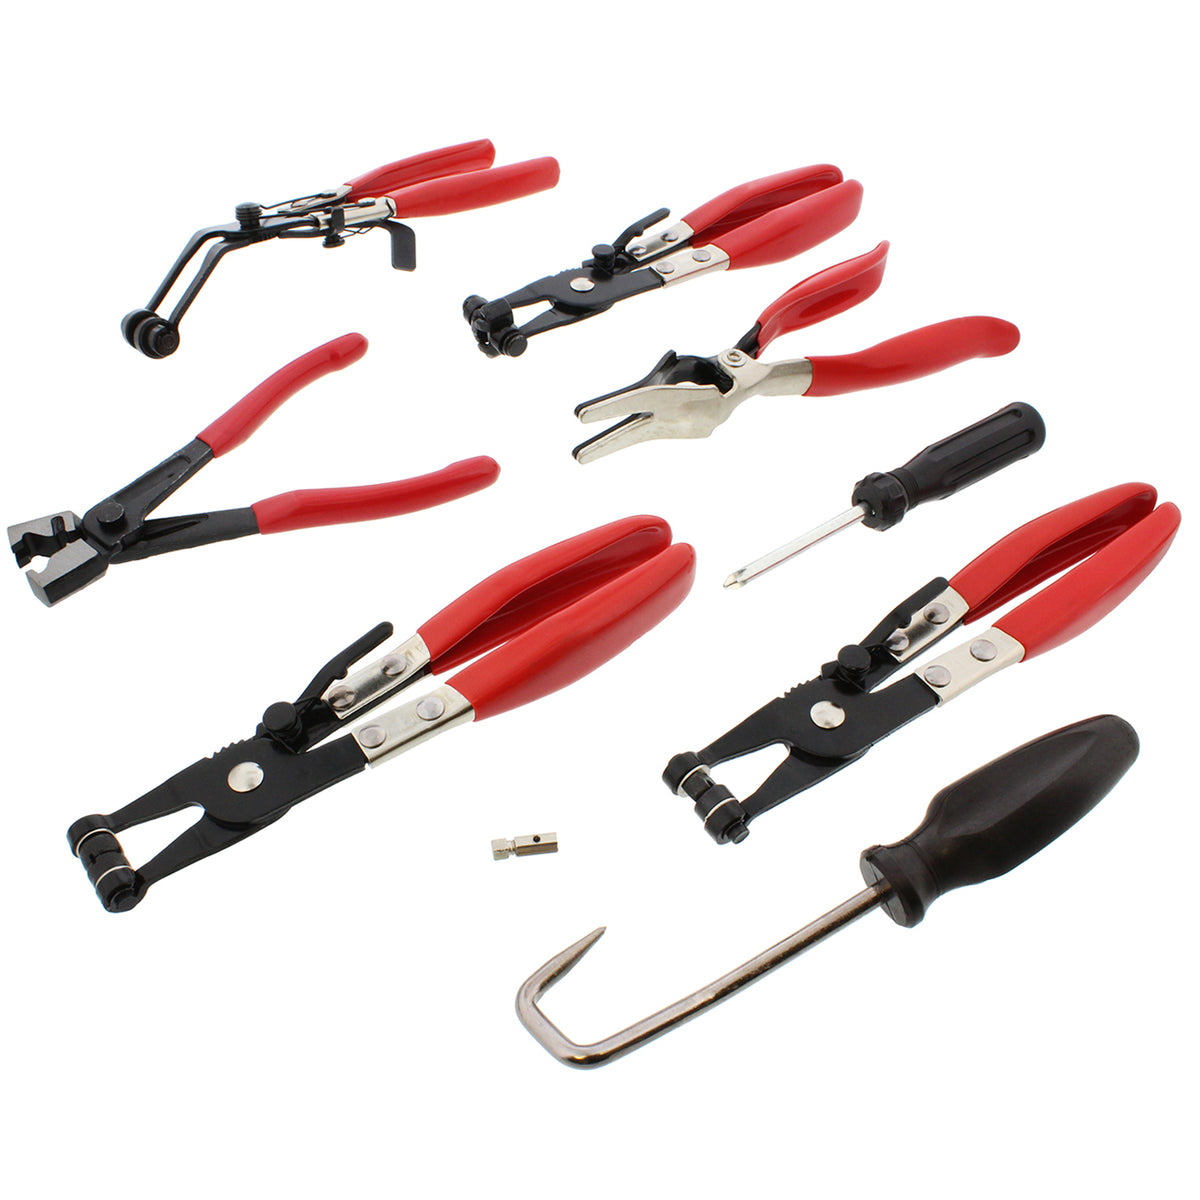 Hose Clamp Pliers 9 pc Remover Tool Kit – Automotive Hose Removal Set